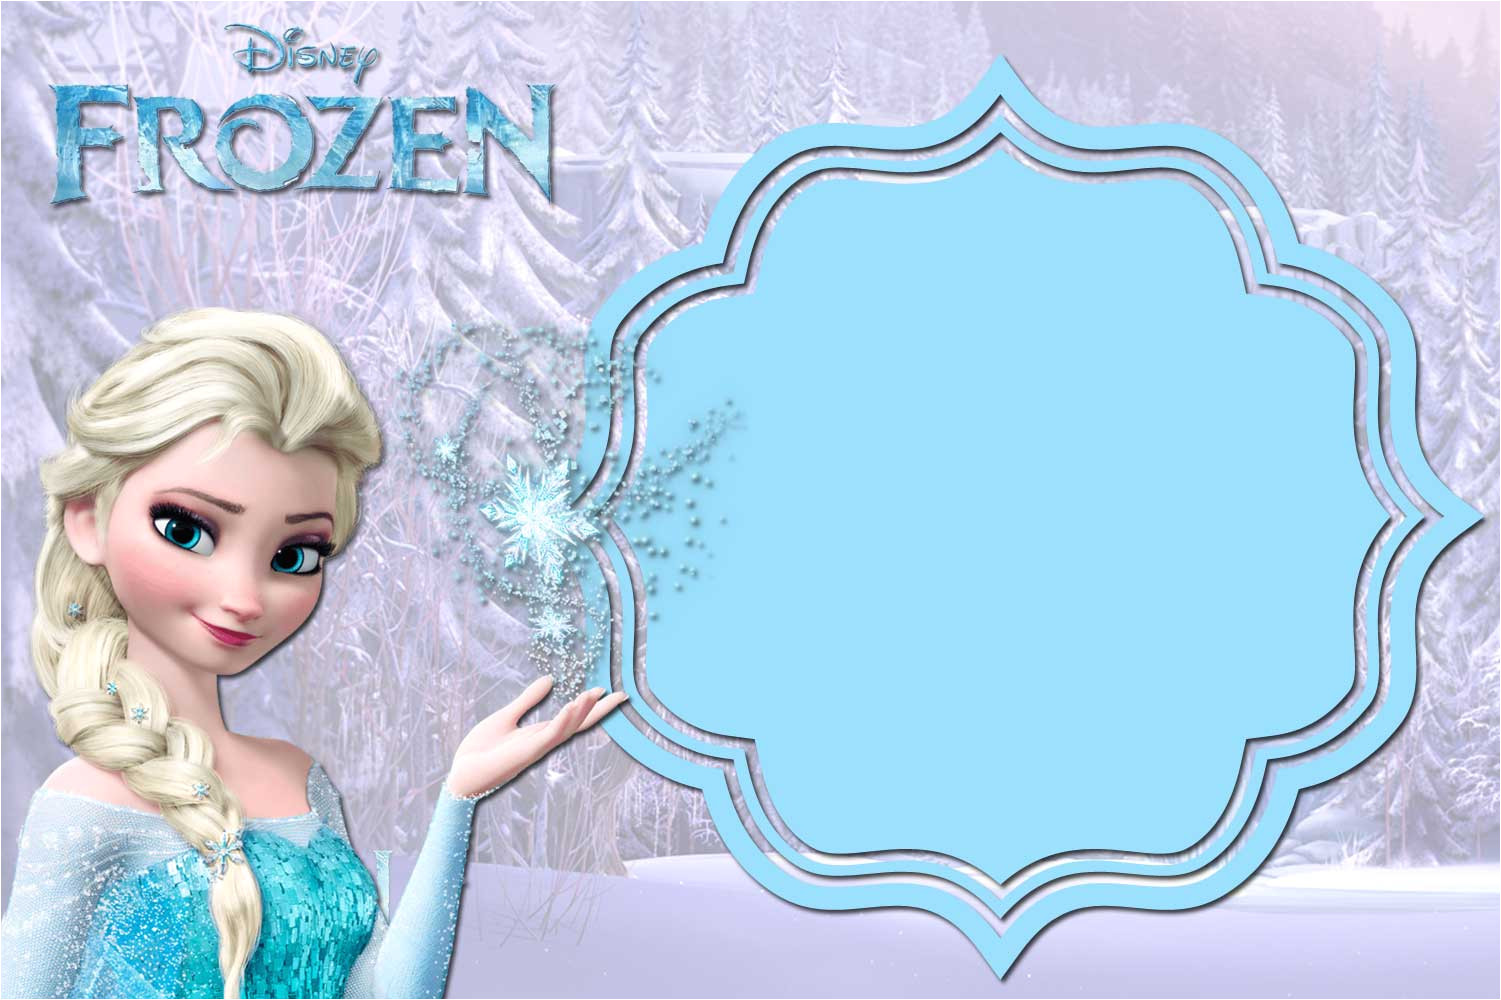 Elsa Party Invitation Template Free Printable Frozen Anna and Elsa Invitation Templates